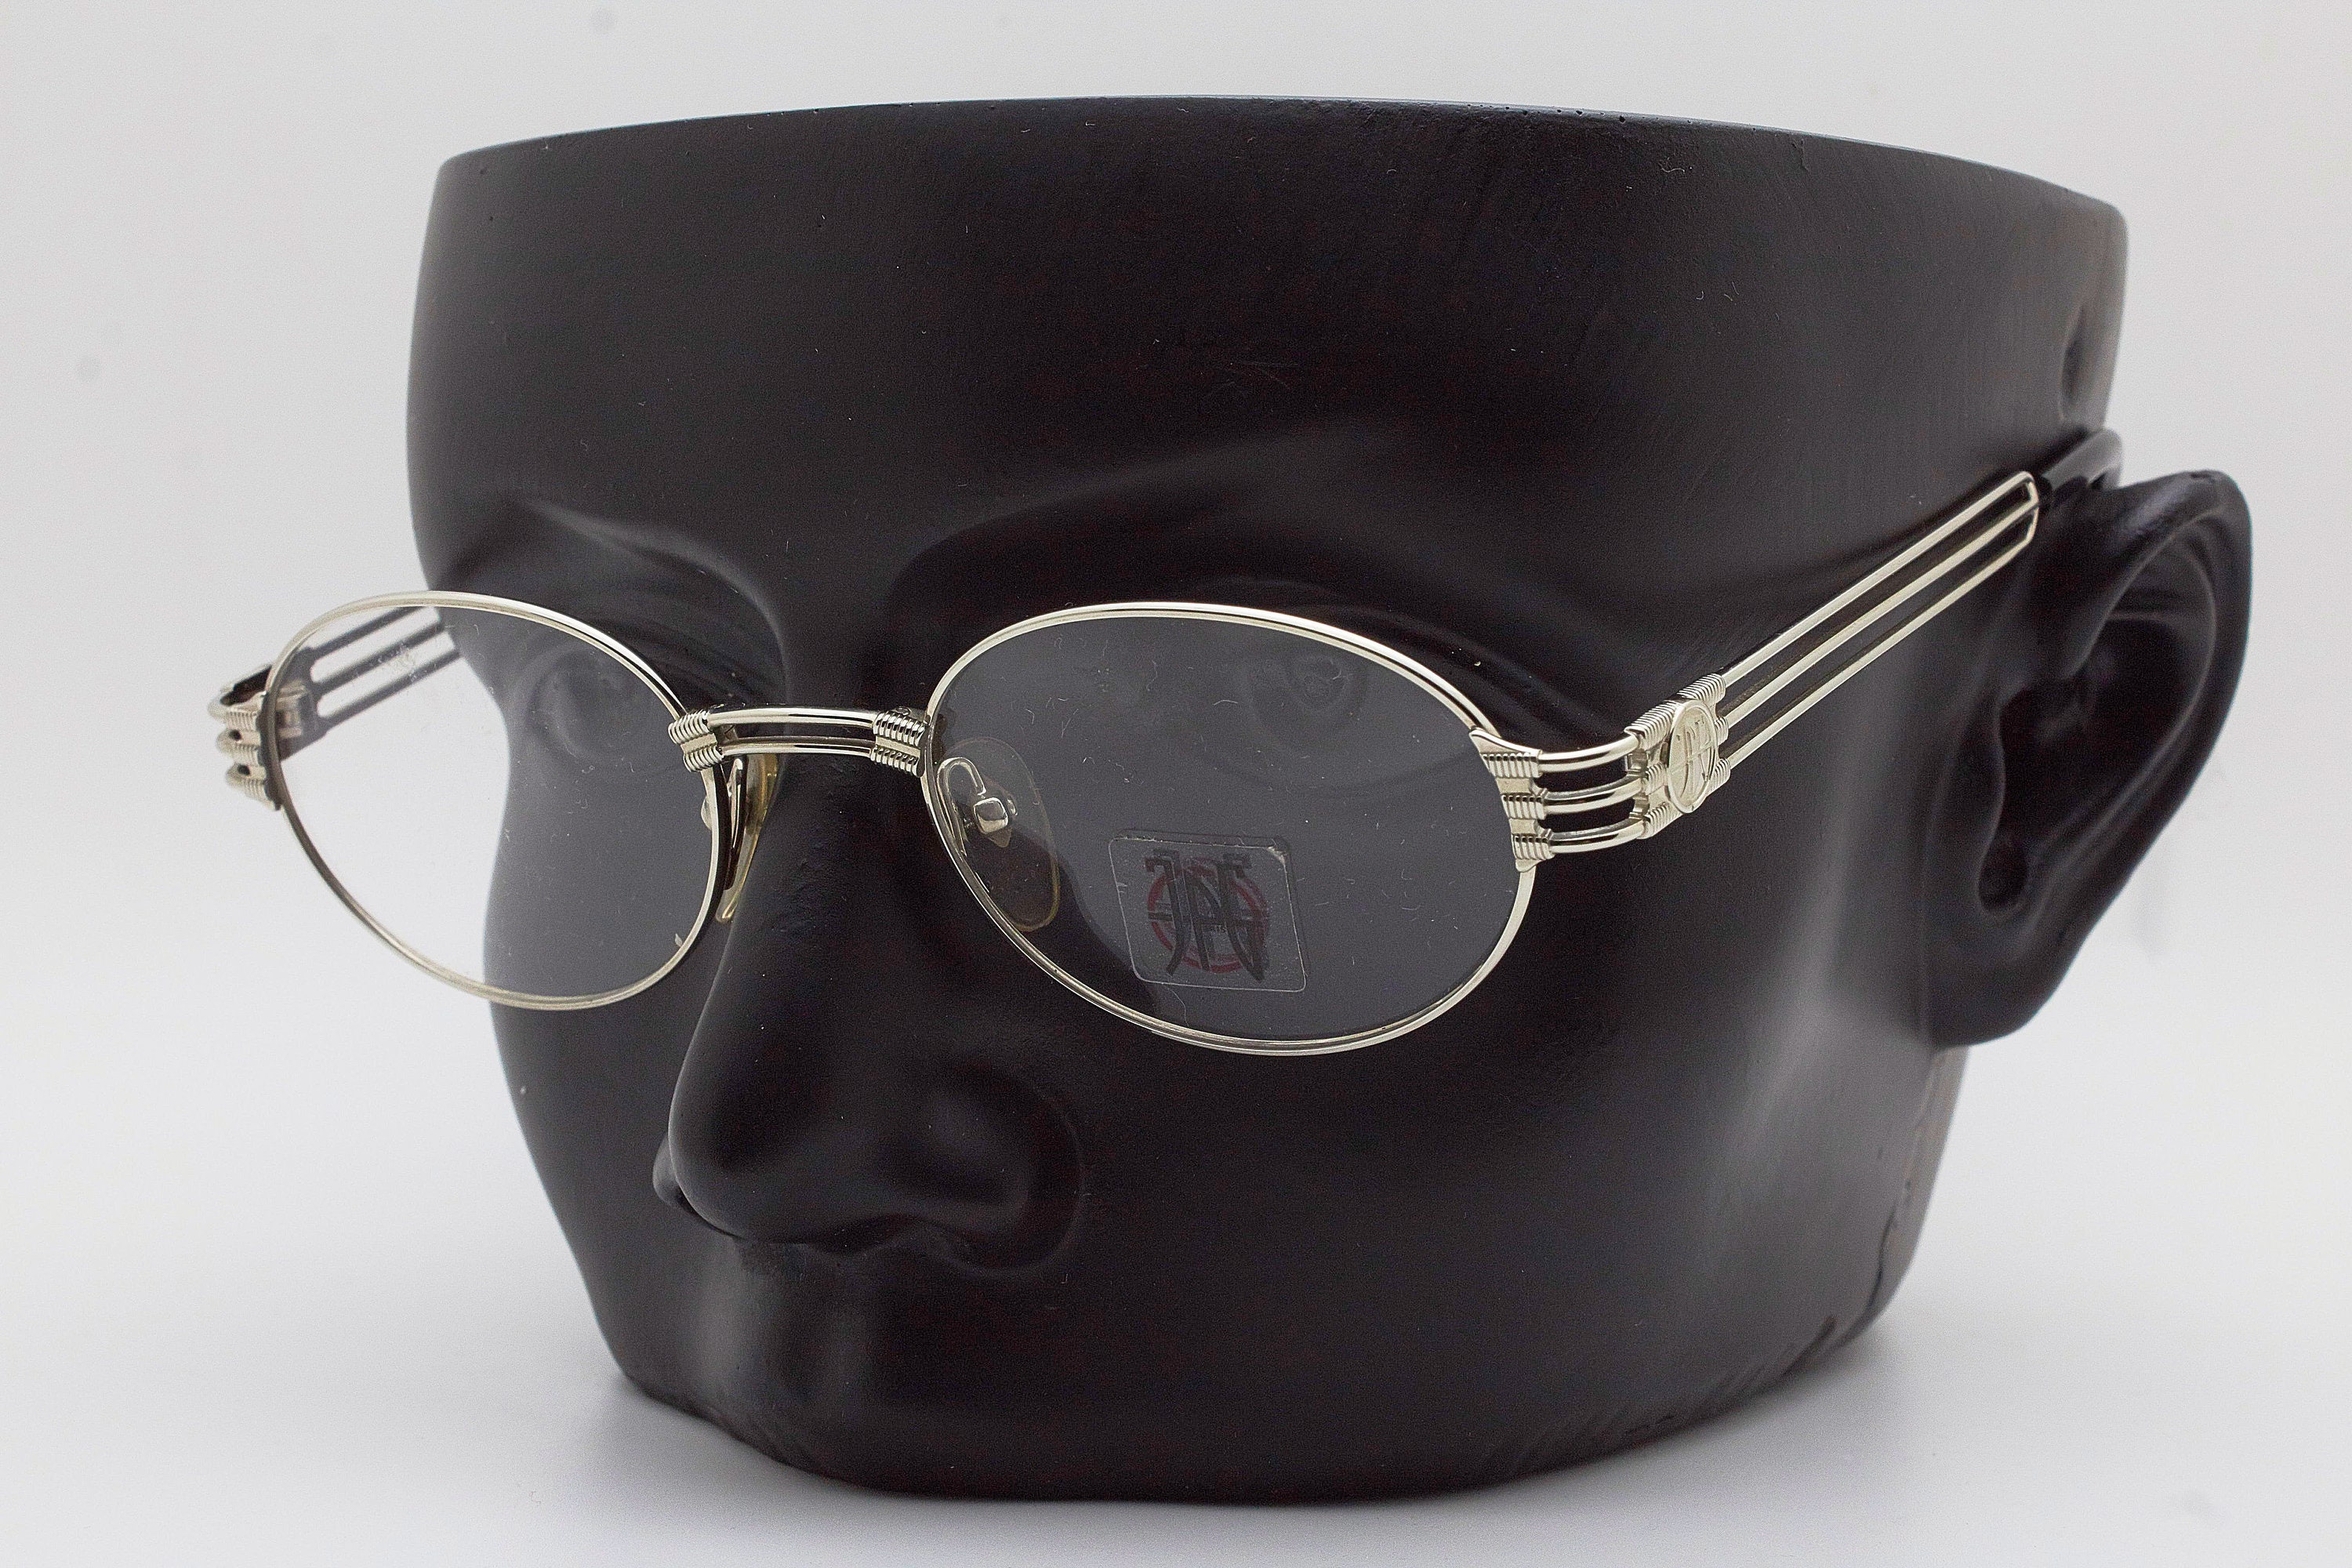 Accessories Sunglasses & Eyewear Glasses Vintage Sunglasses Jean Paul Gaultier 58-2172 pantos round metal glasses Made in Japan New Old Stock 